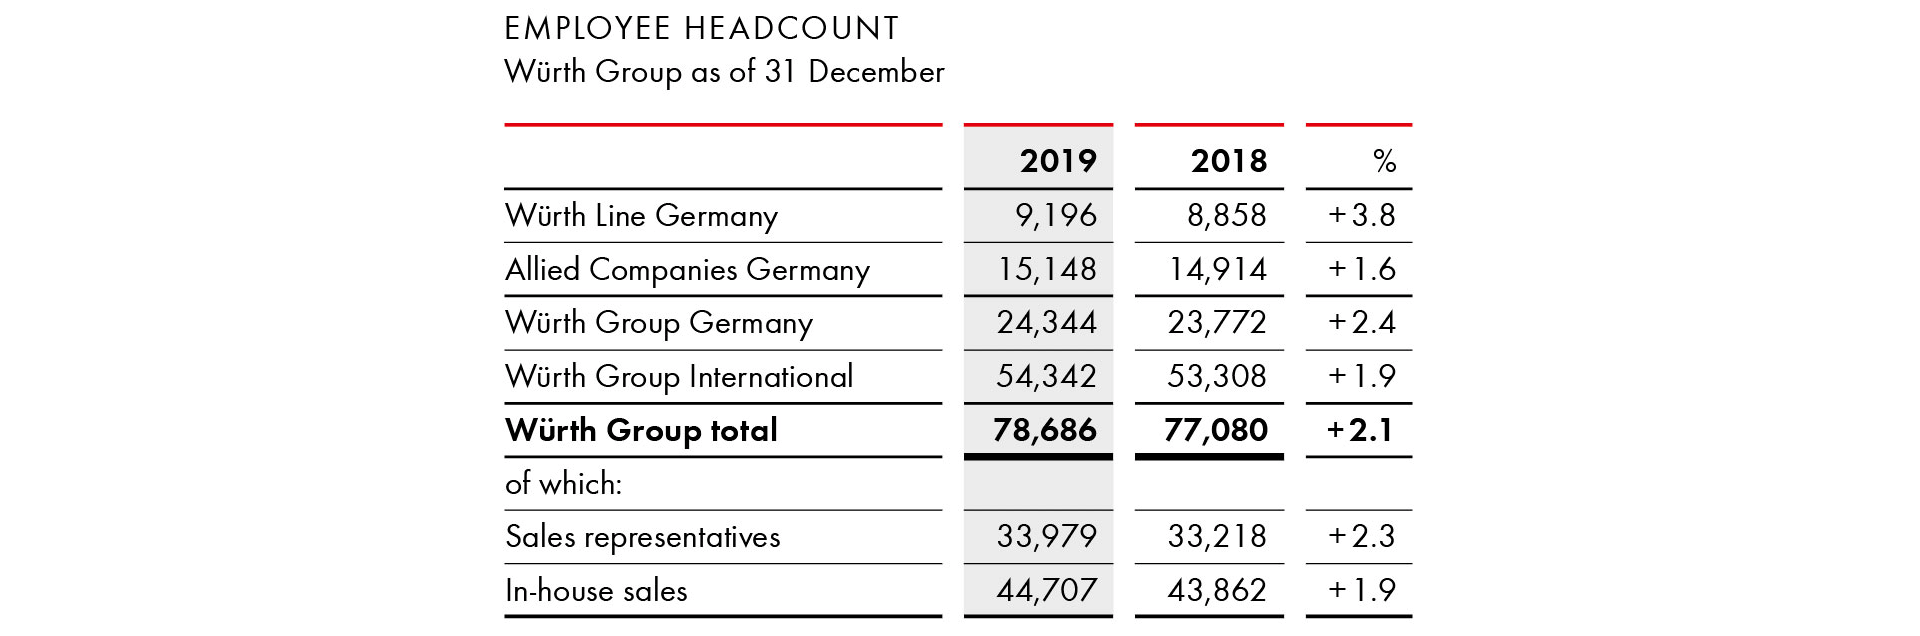 Employee headcount 
Würth Group as of 31 December